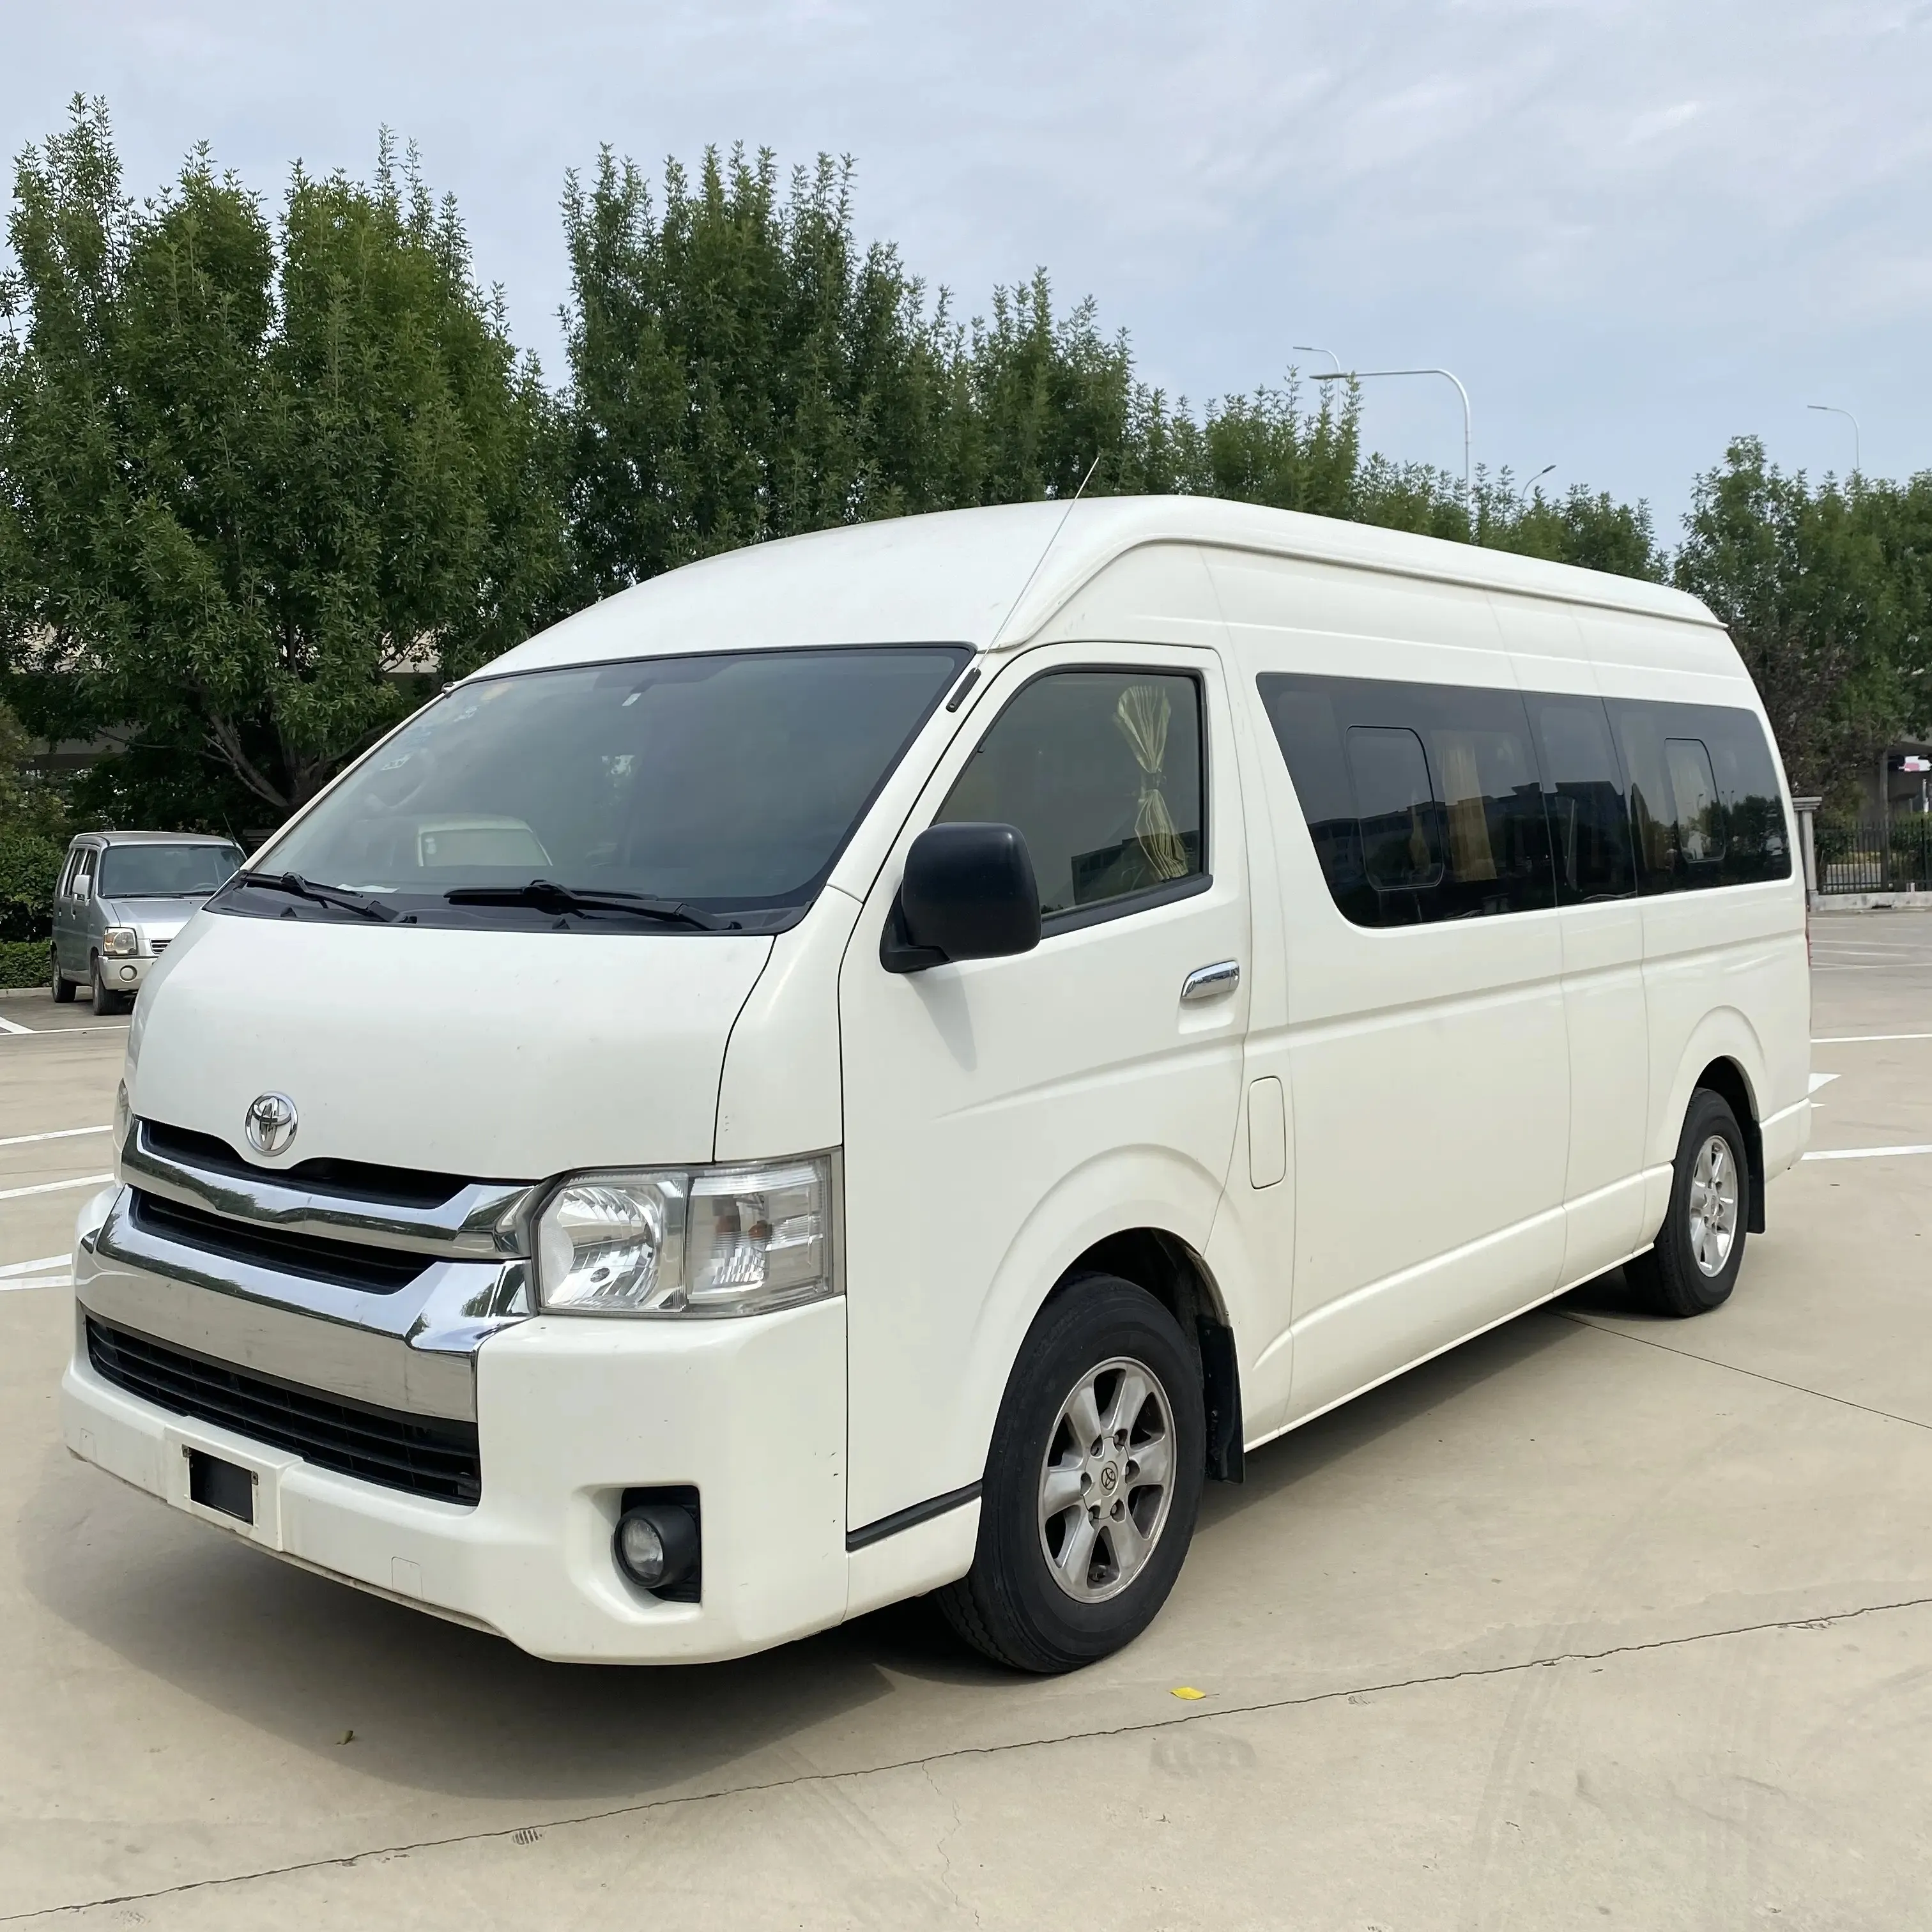 Obral harga promosi Toyota Hiace Bus Mini Van Mini bensin